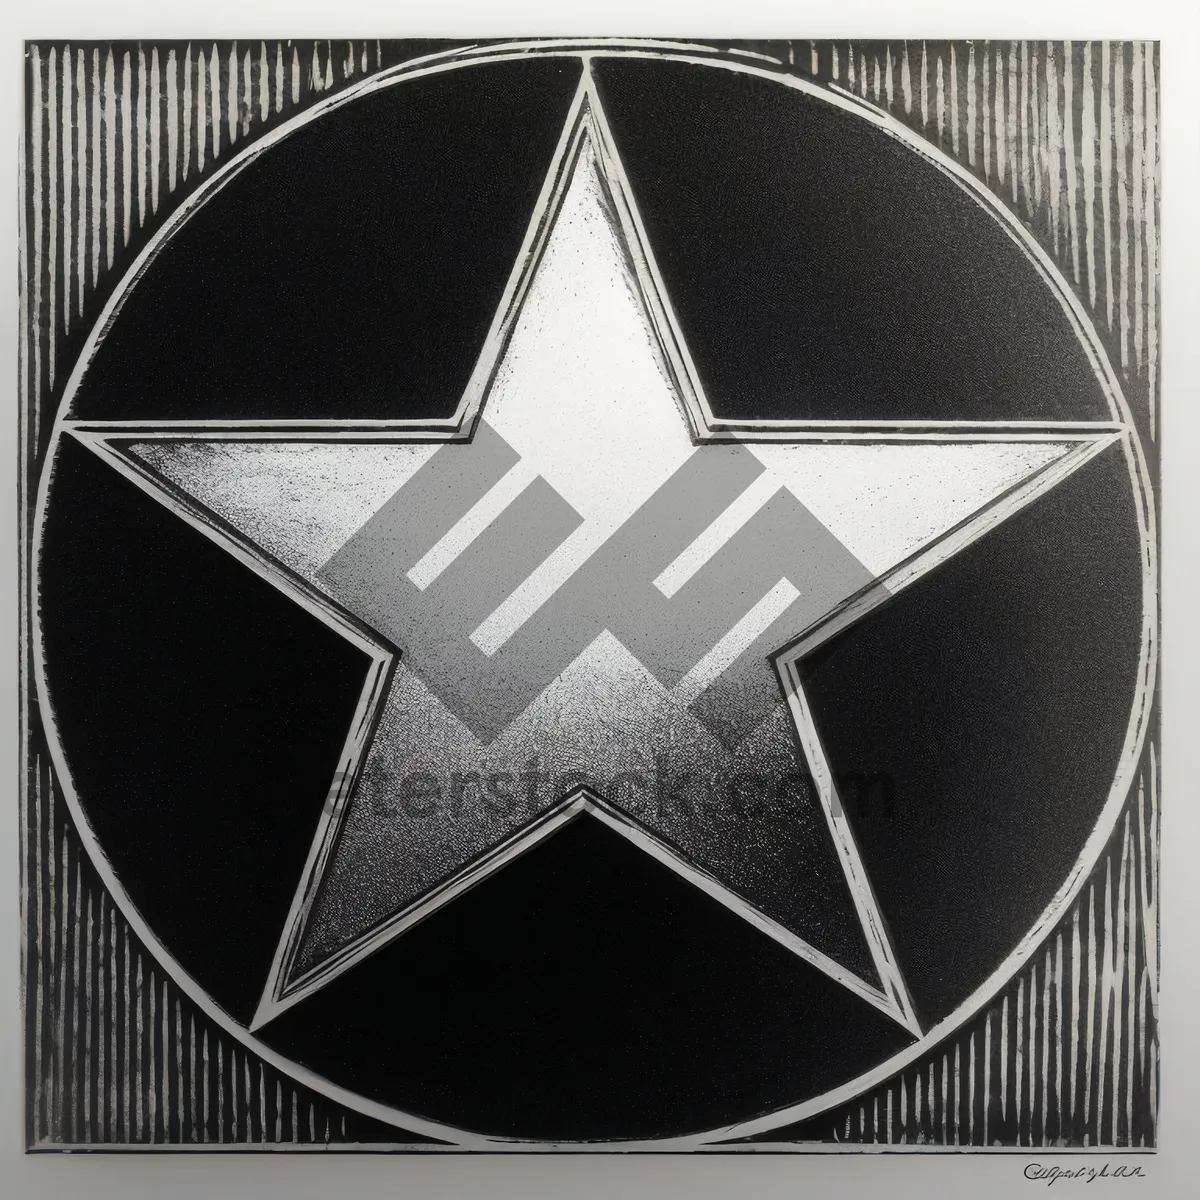 Picture of Geometric Heraldic Symbol: Intricate Gem-inspired Design